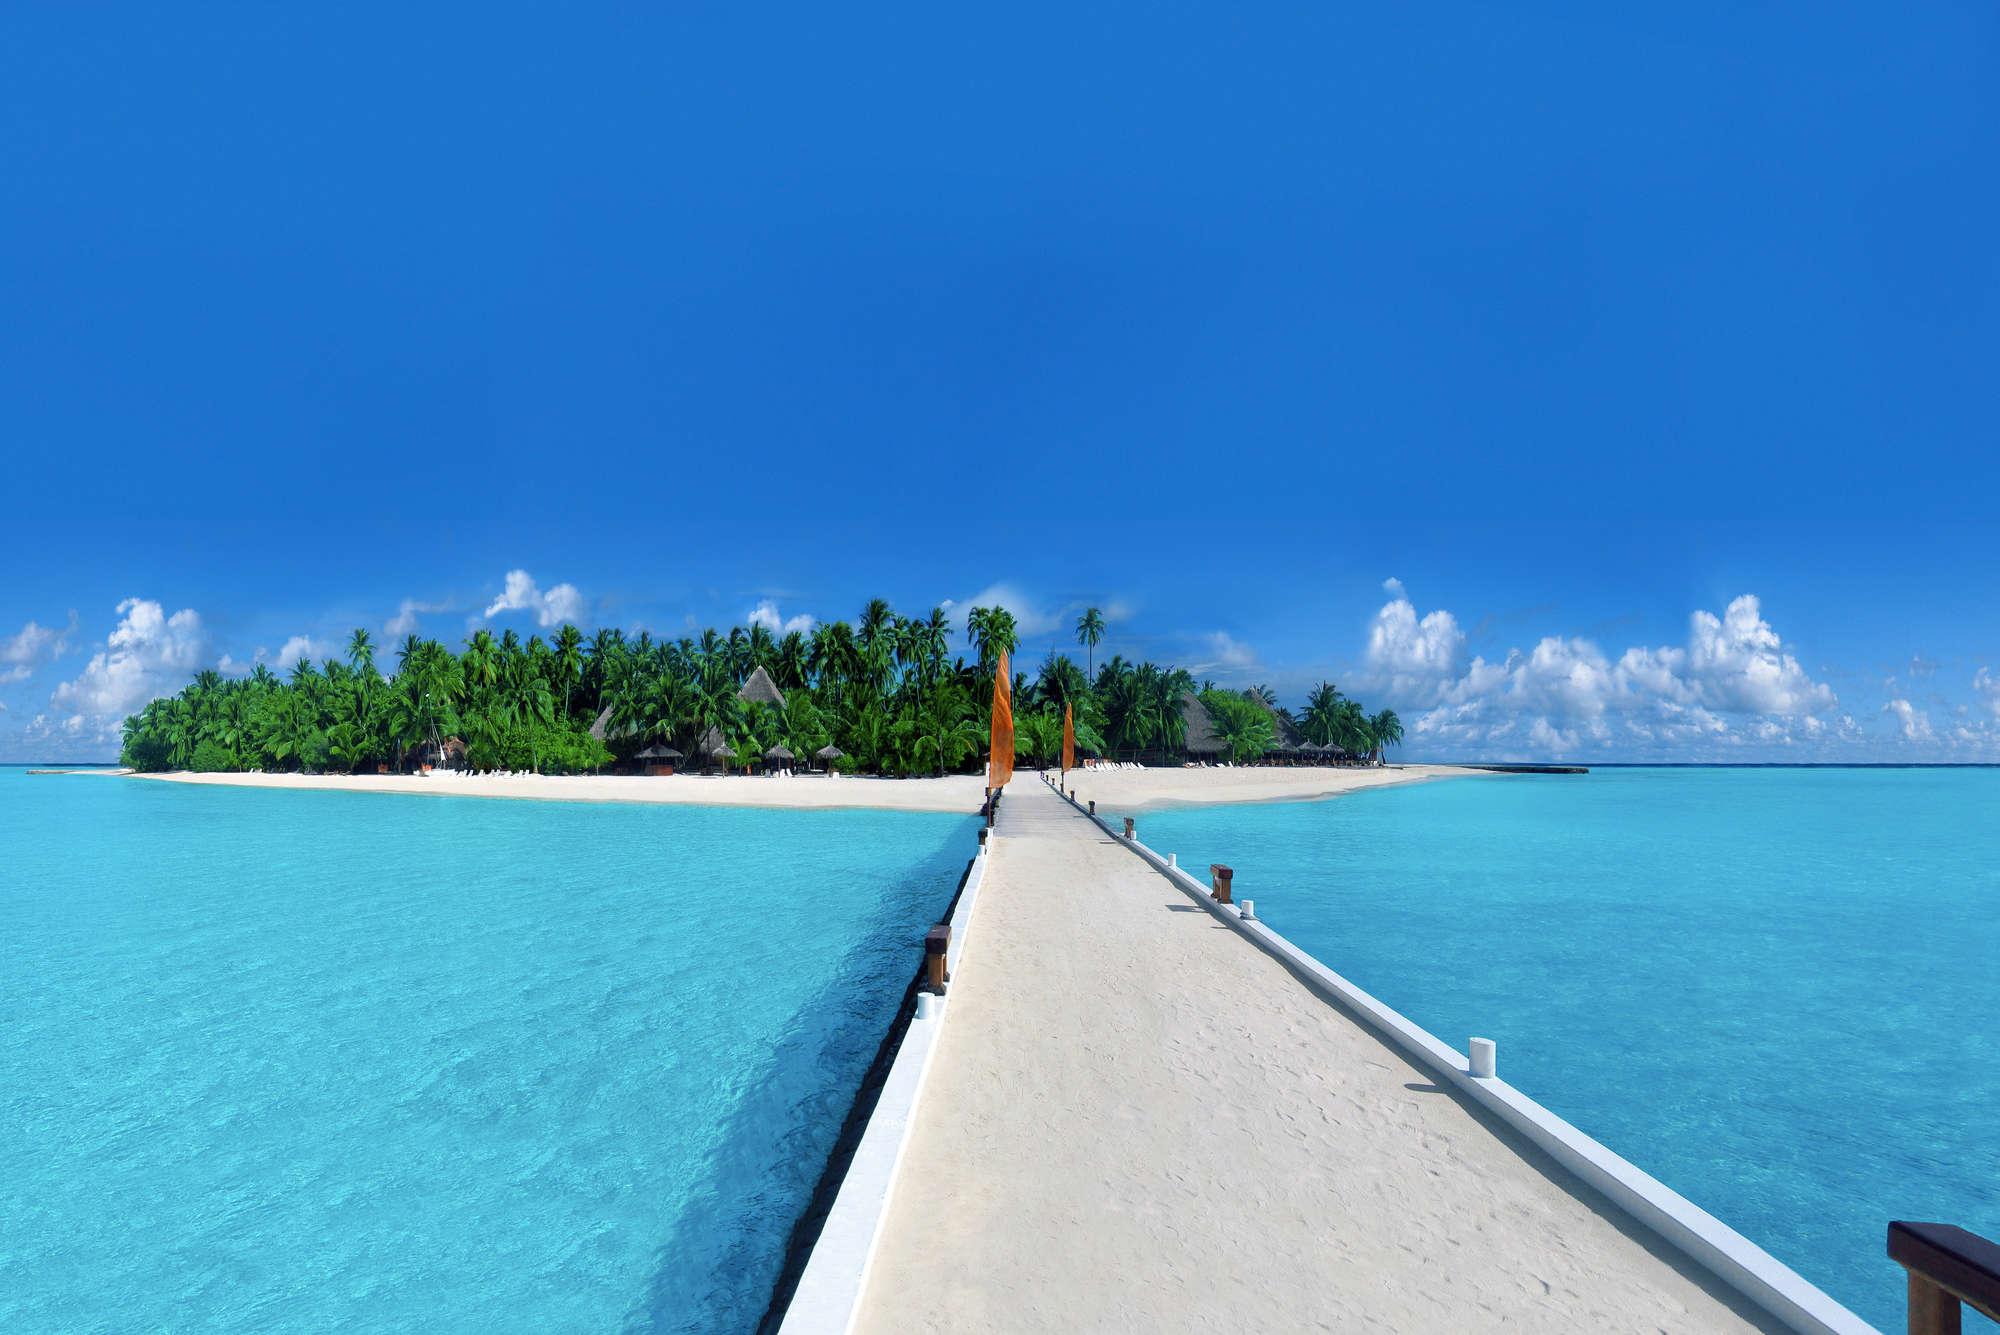             Photo wallpaper Island with jetty to the beach - Premium smooth fleece
        